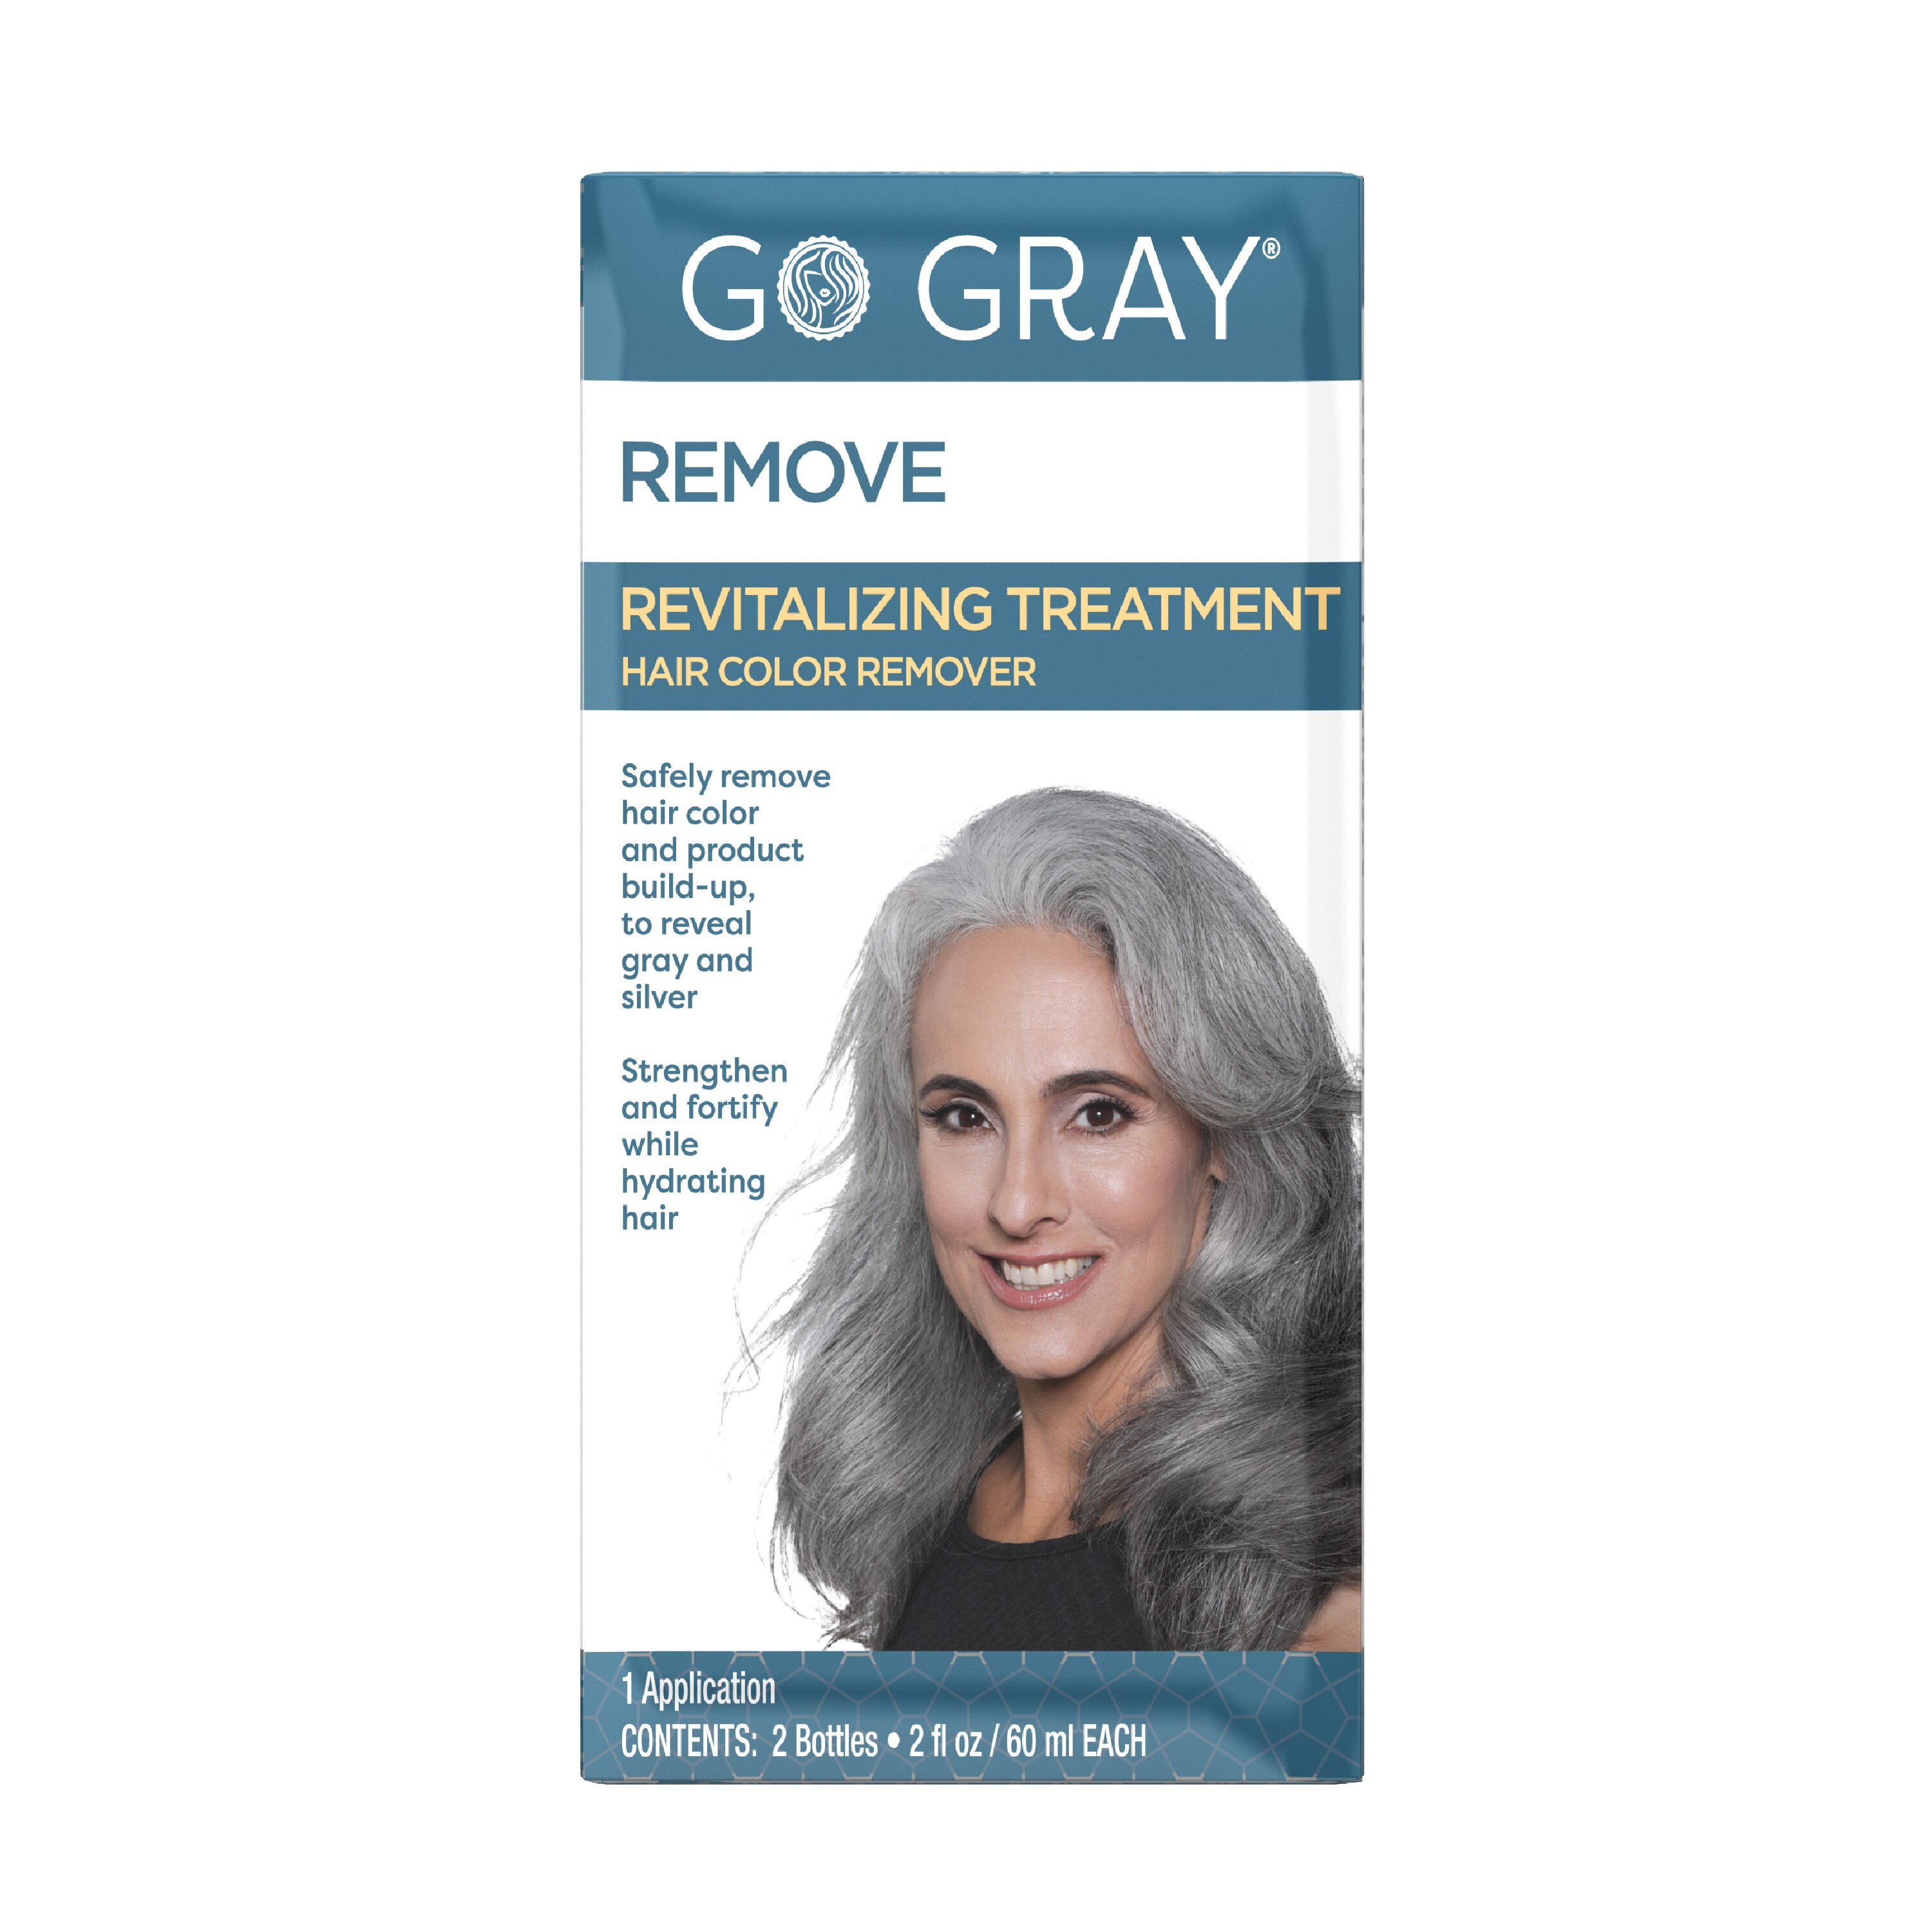 Go Gray Revitalizing Treatment Hair Color Remover, 4 Oz - 1 , CVS